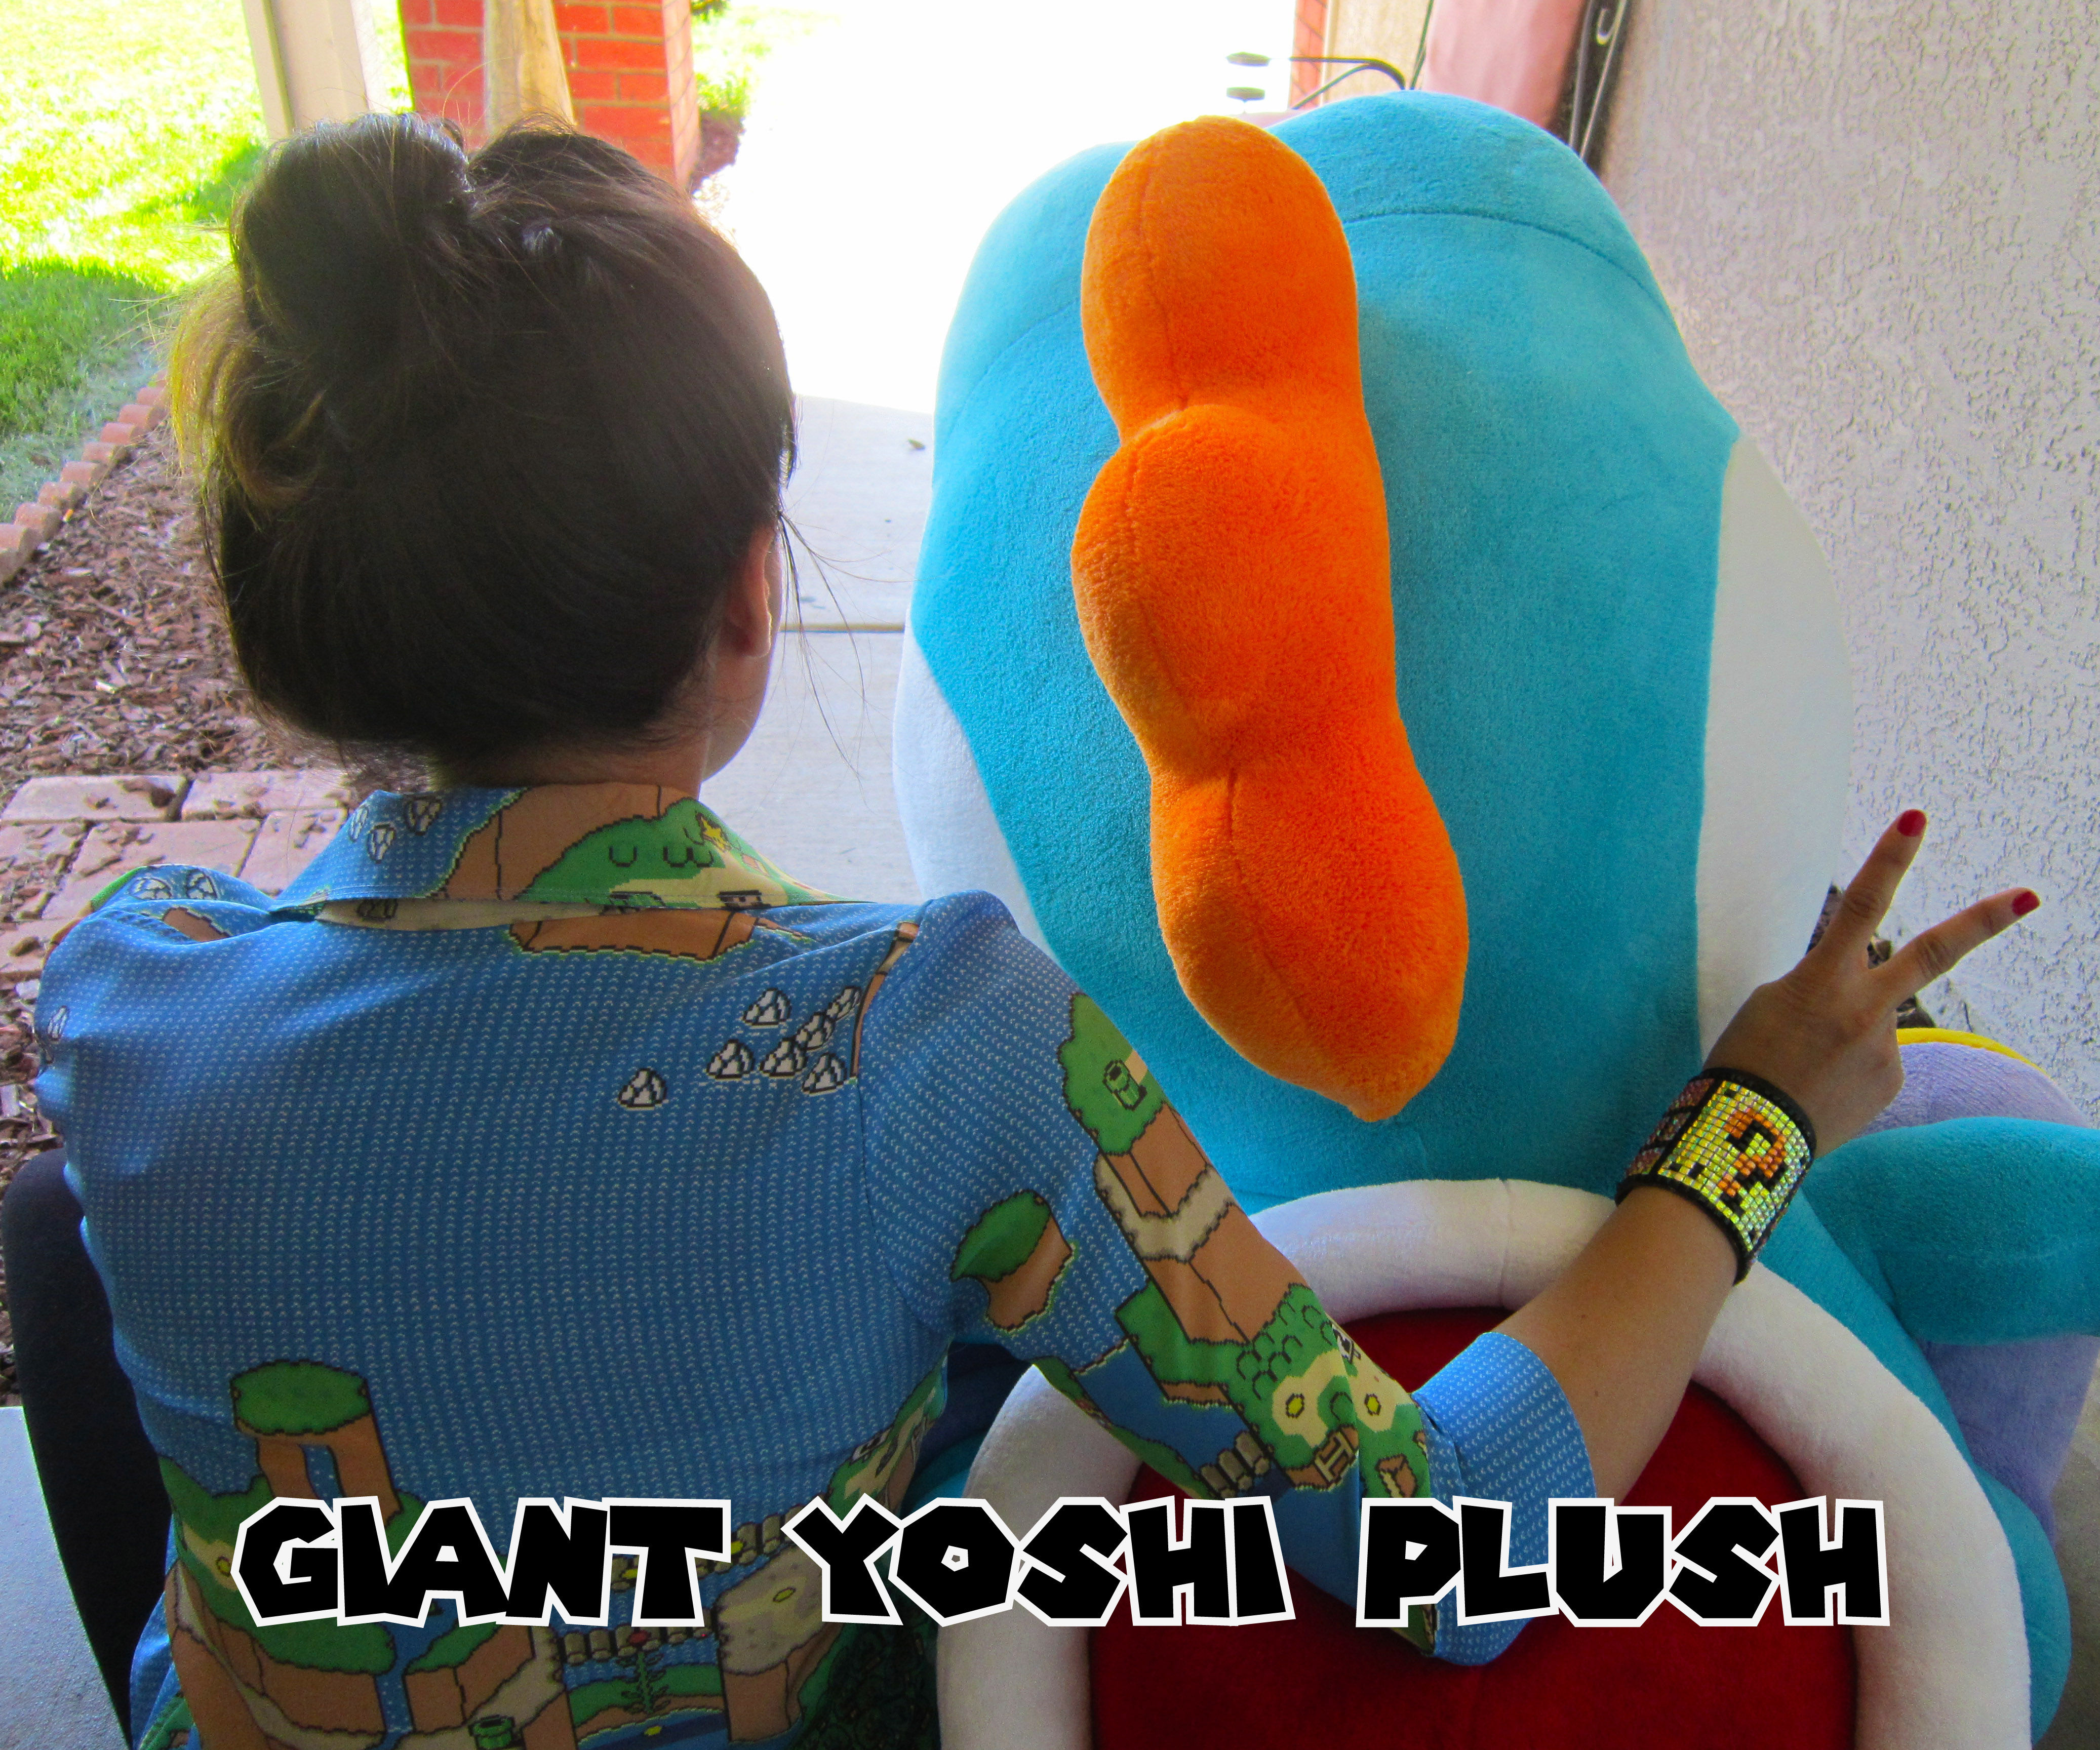 Giant Yoshi Plush